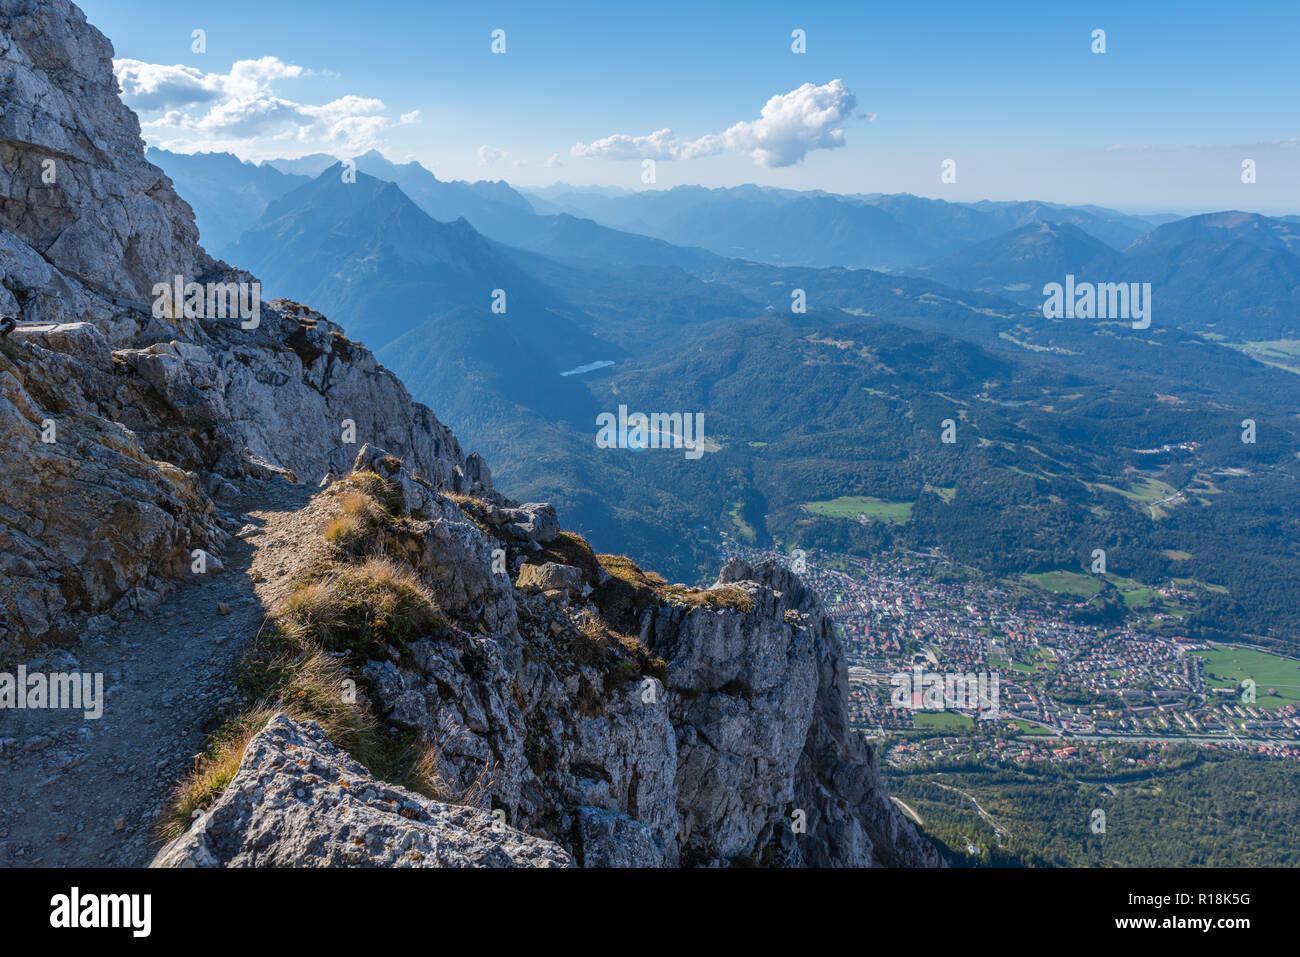 Passamani Panoramaweg, Passamani Hiking Trail, view on Mittenwald, Karwendelbahn, Karwendelgebirge or Karwendel Mountains, The Alps, Bavaria, Germany Stock Photo